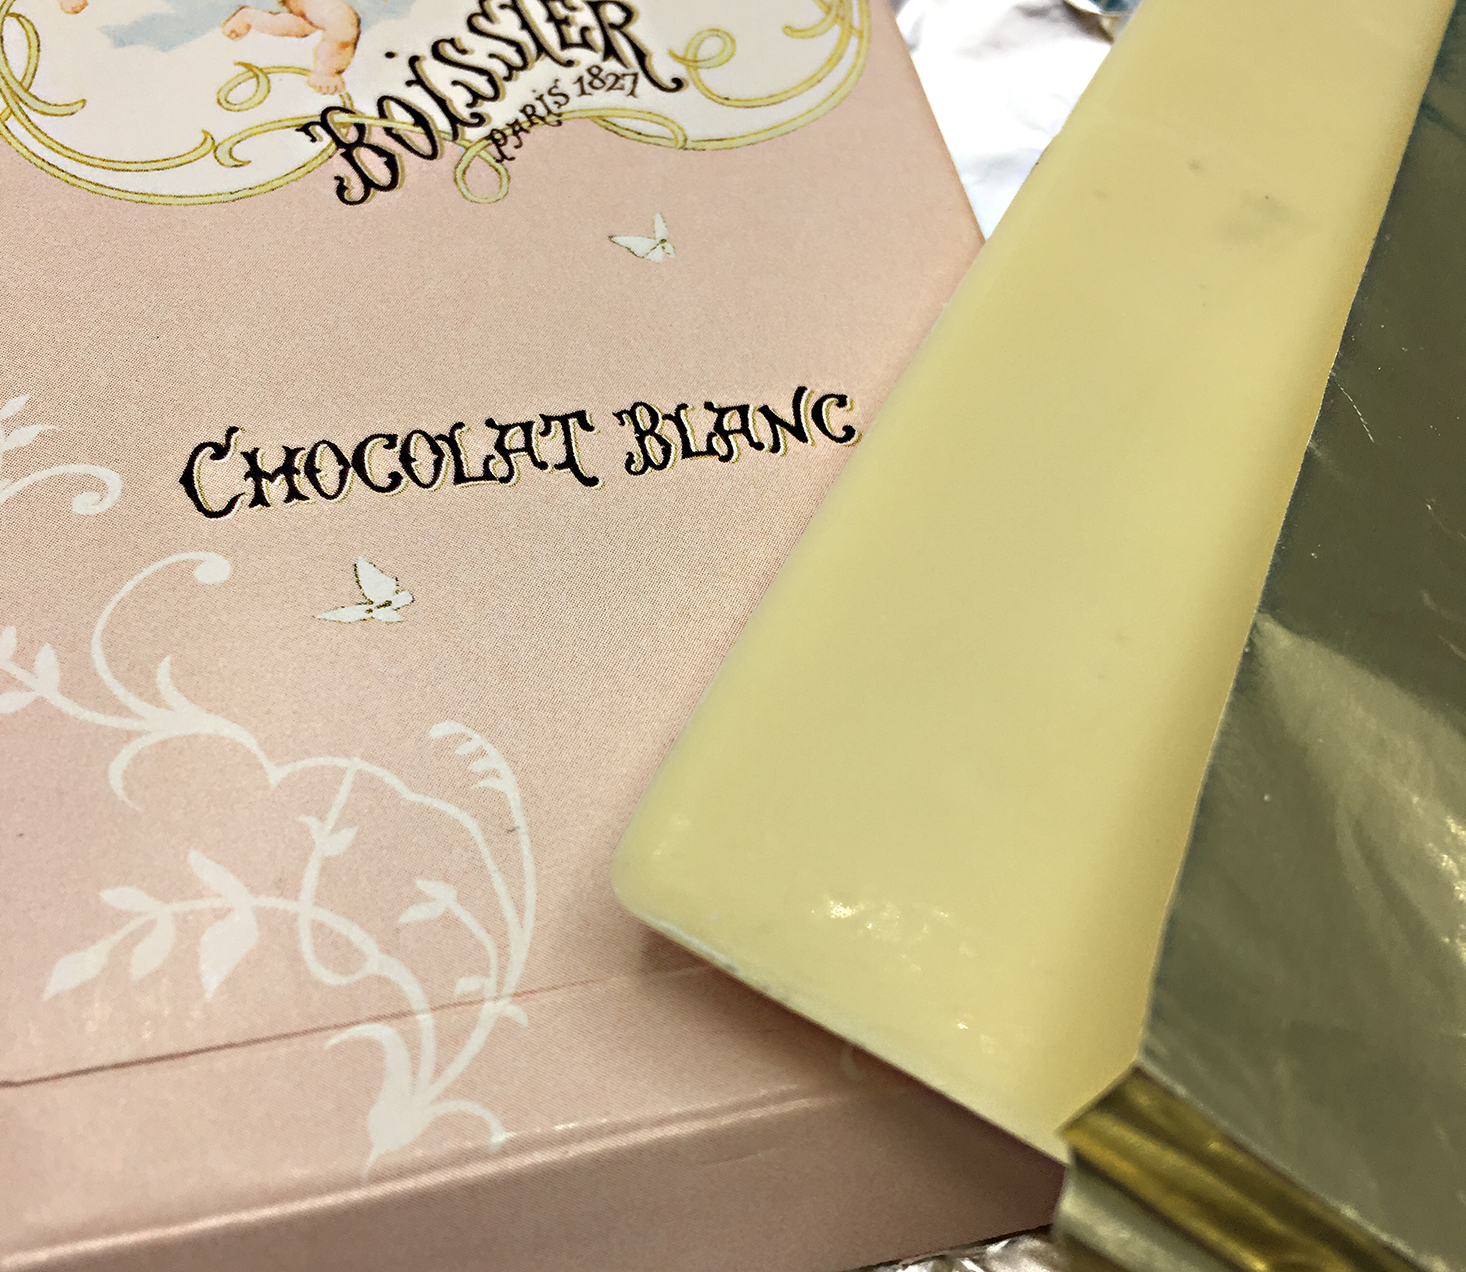 Chococurb-January-2017-Boissier-Chocolate